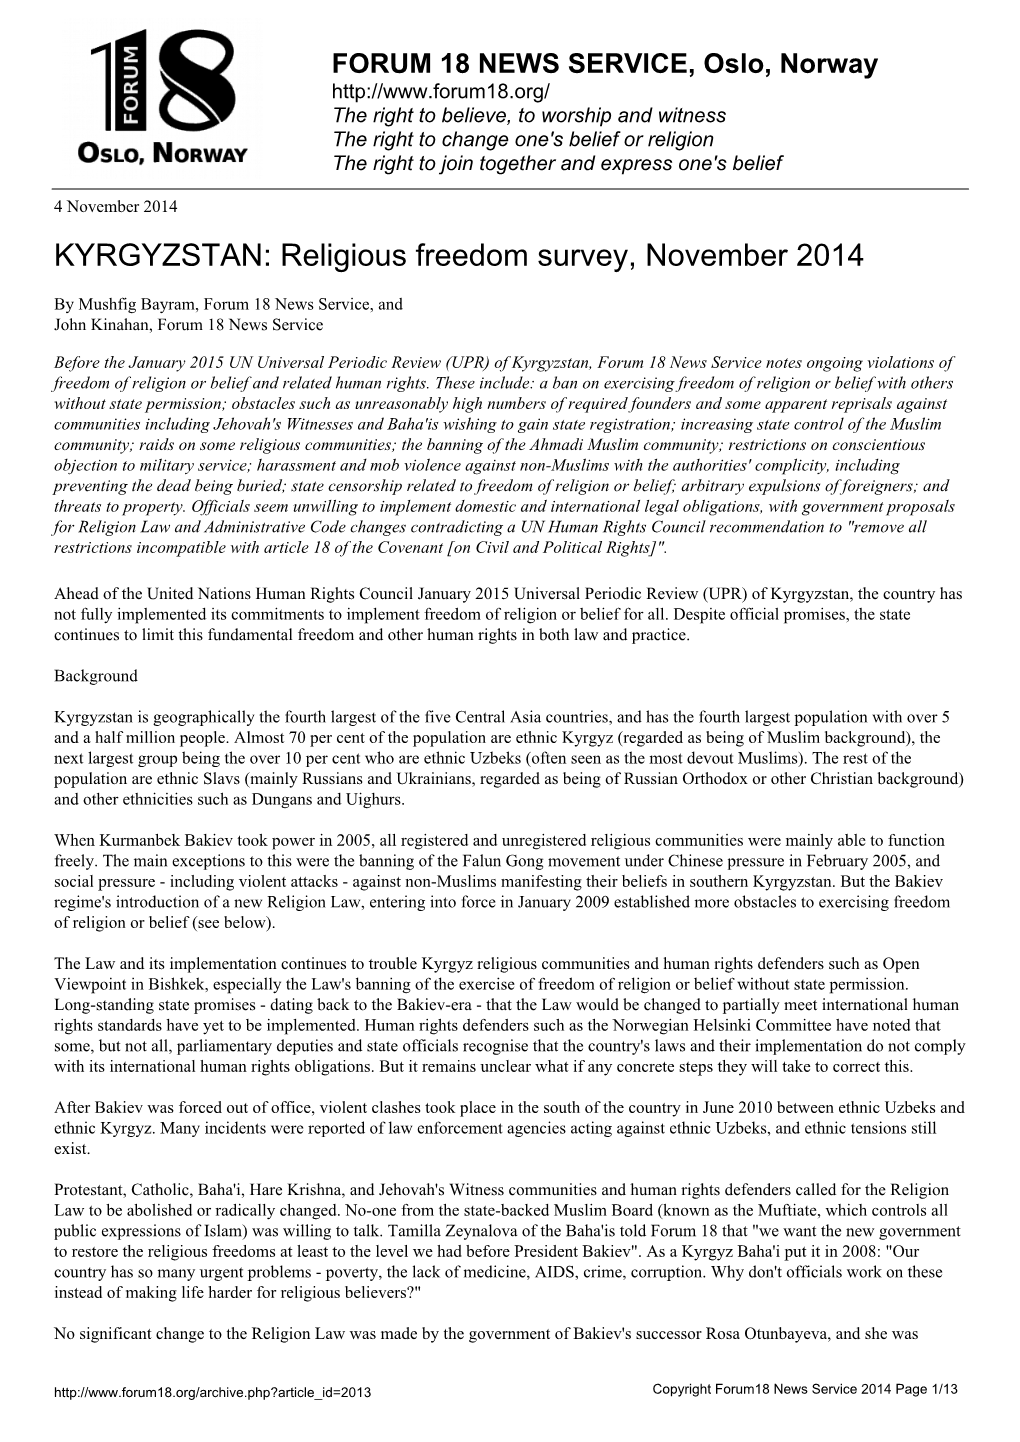 KYRGYZSTAN: Religious Freedom Survey, November 2014